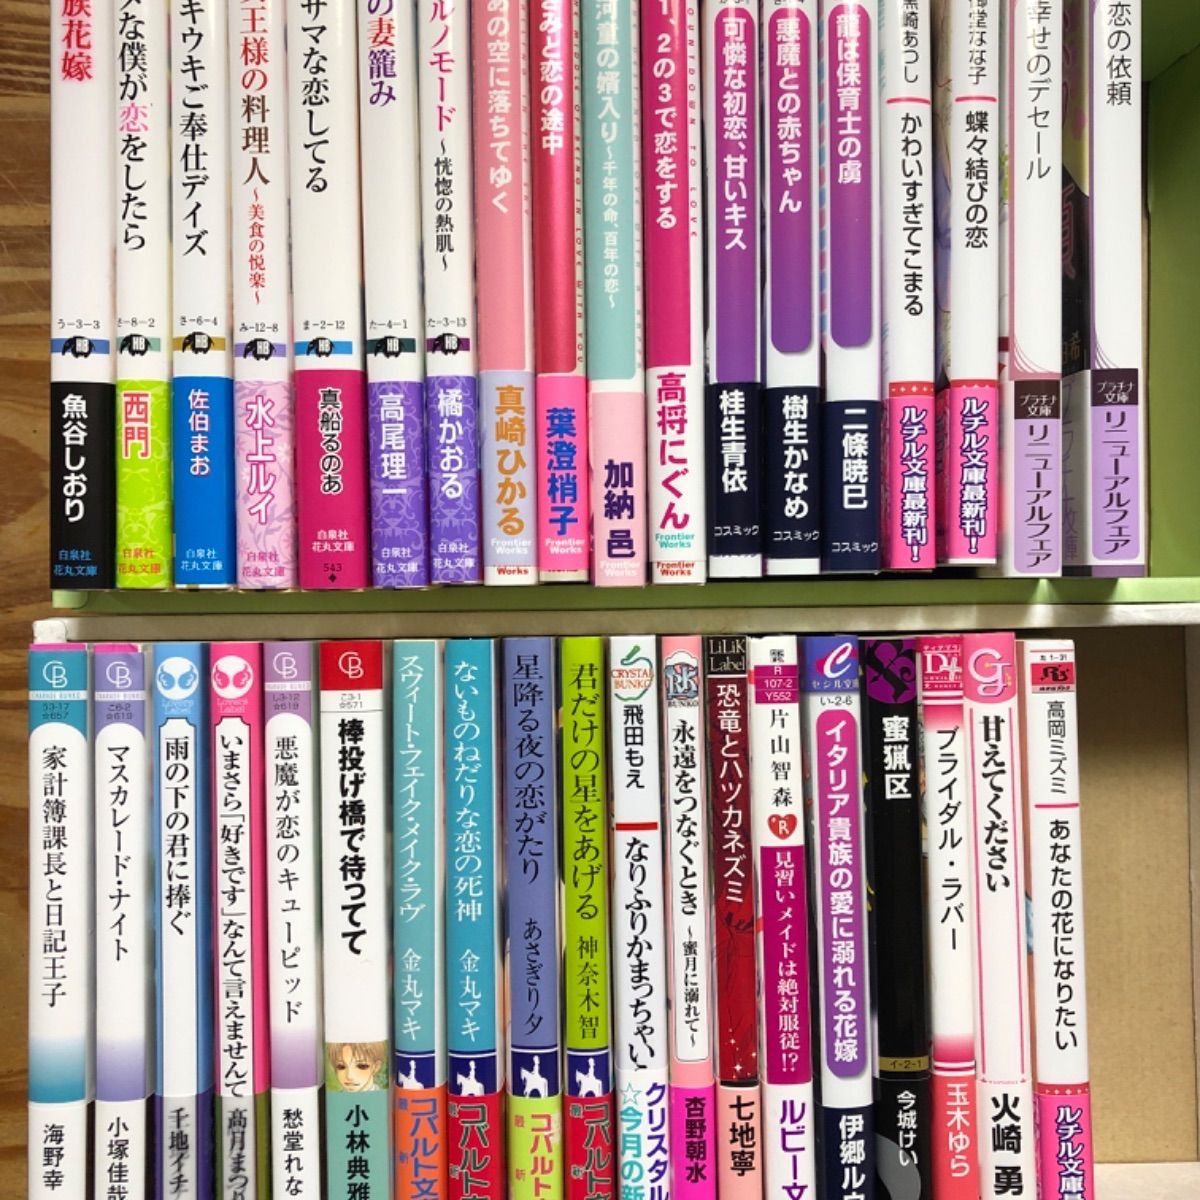 BL小説まとめ売り 37冊セット - ドラドラ堂 - メルカリ